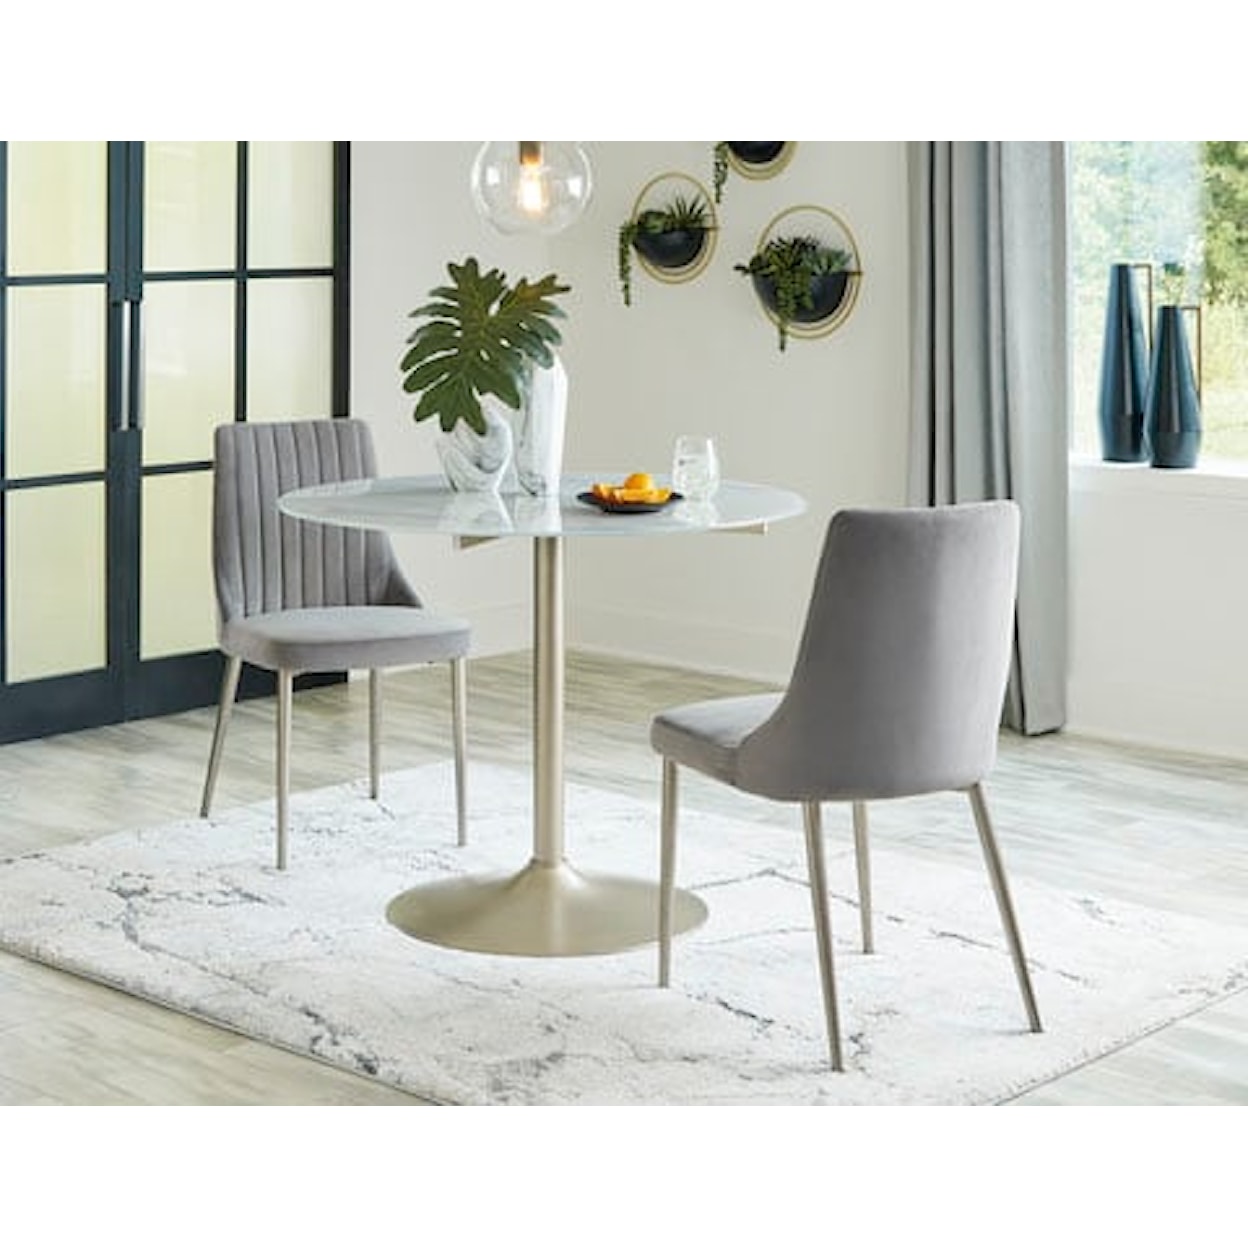 Ashley Furniture Signature Design Barchoni 3-Piece Dining Set